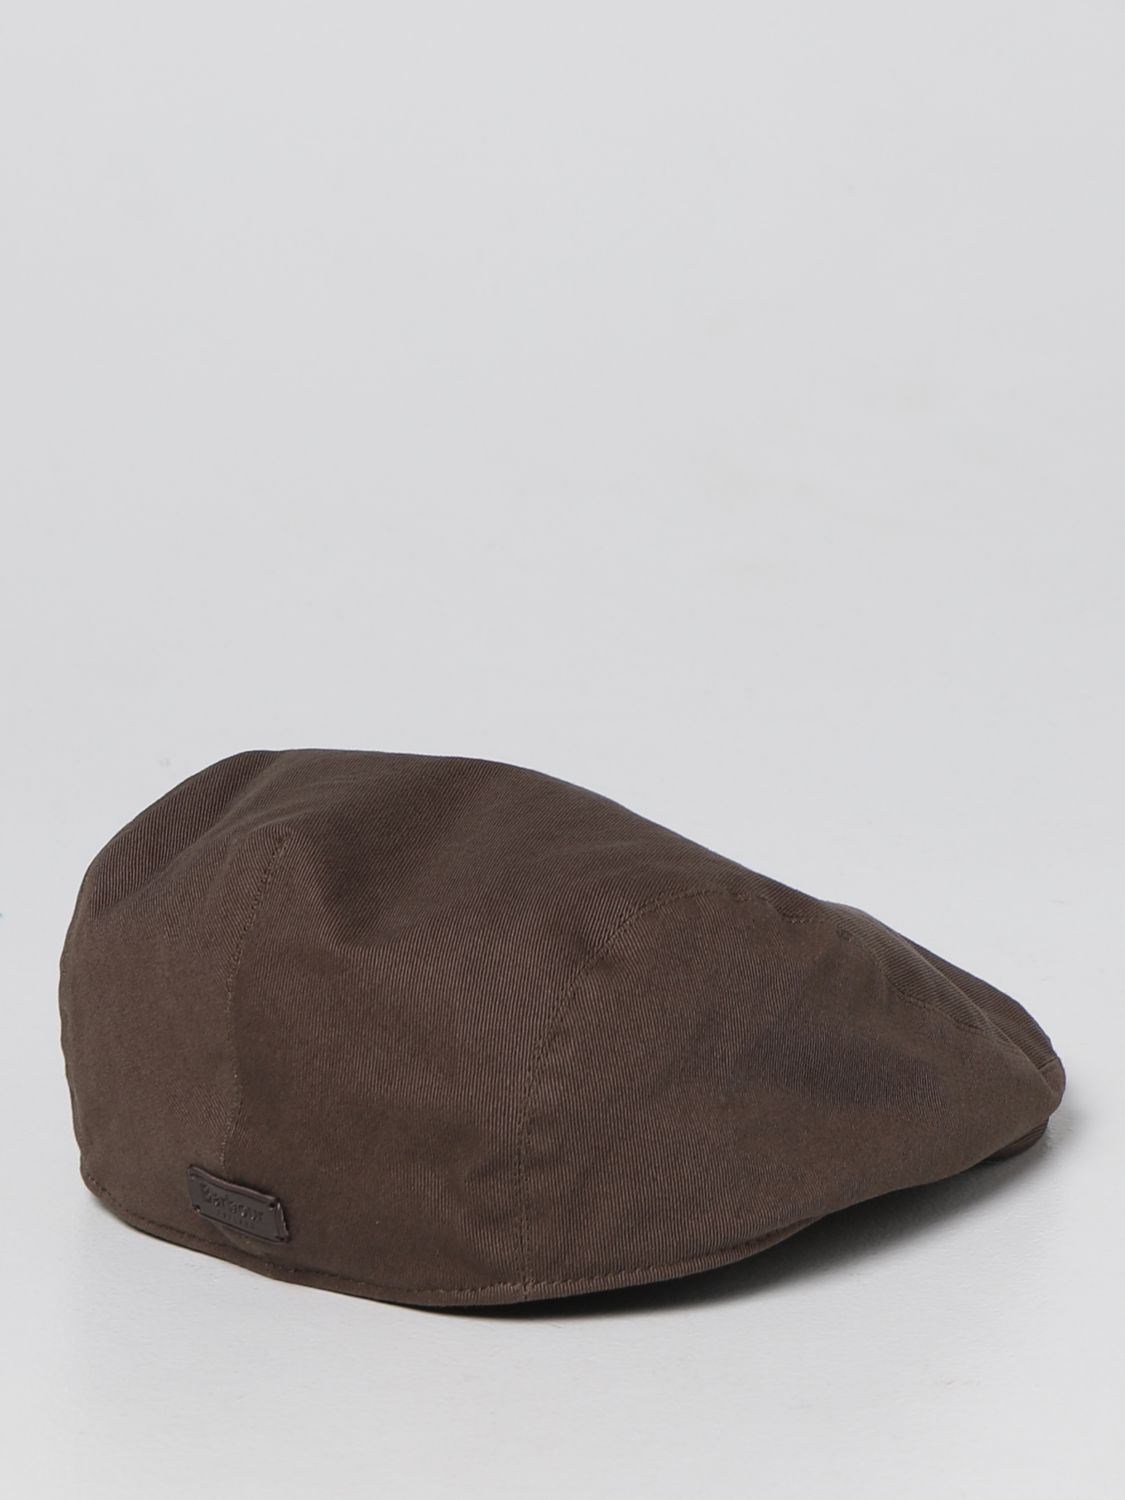 BARBOUR: 帽子 メンズ - オリーブ | 帽子 Barbour MHA0413 GIGLIO.COM